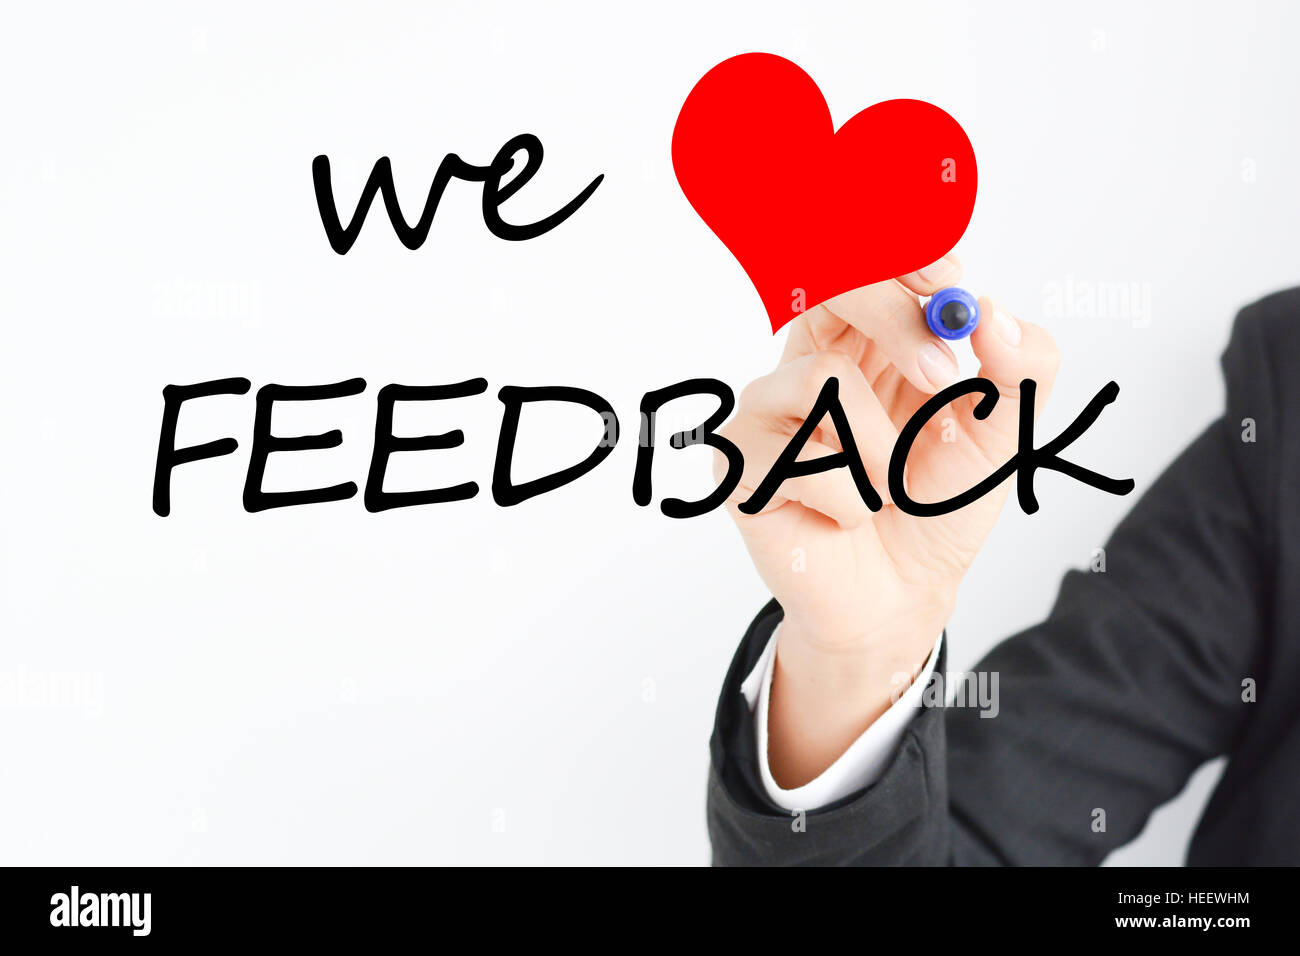 We love feedback concept Stock Photo